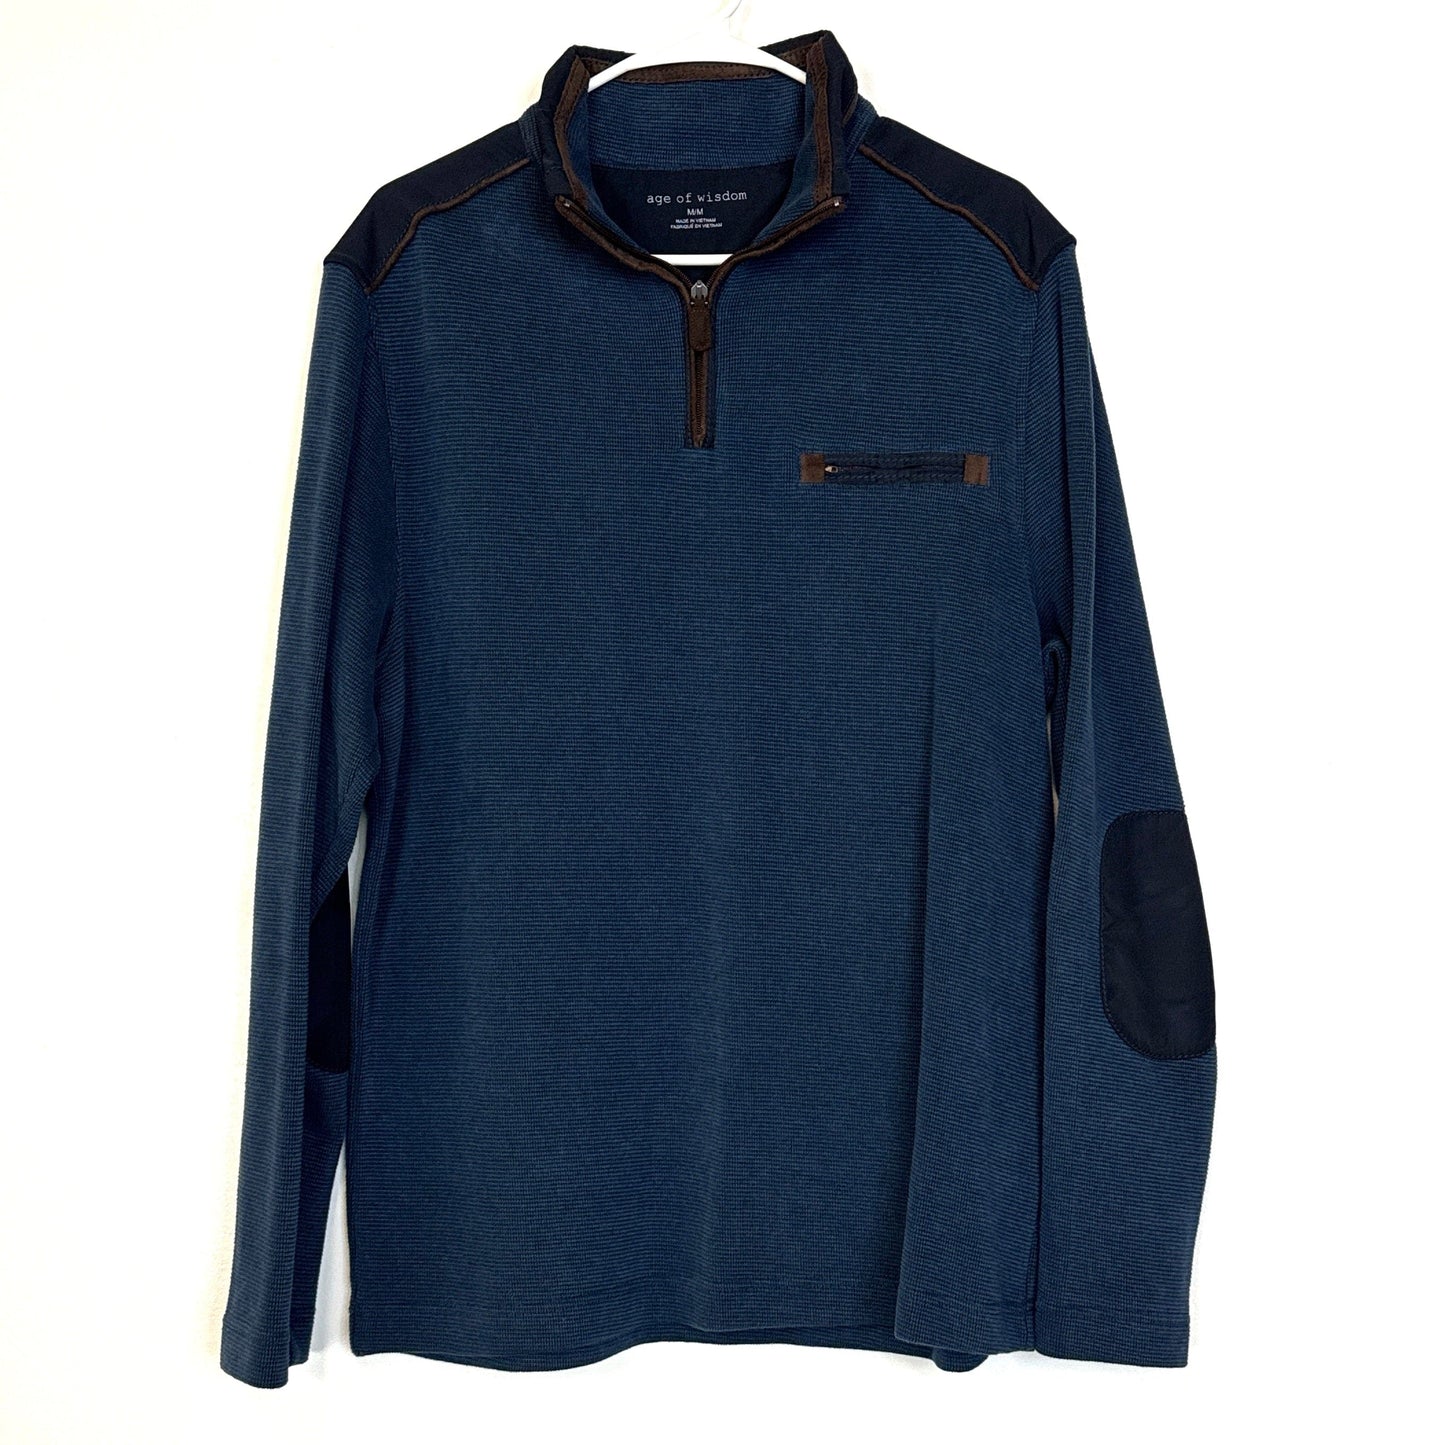 Age of Wisdom Mens Size M Blue 1/4 Zip-Up Sweater L/s EUC